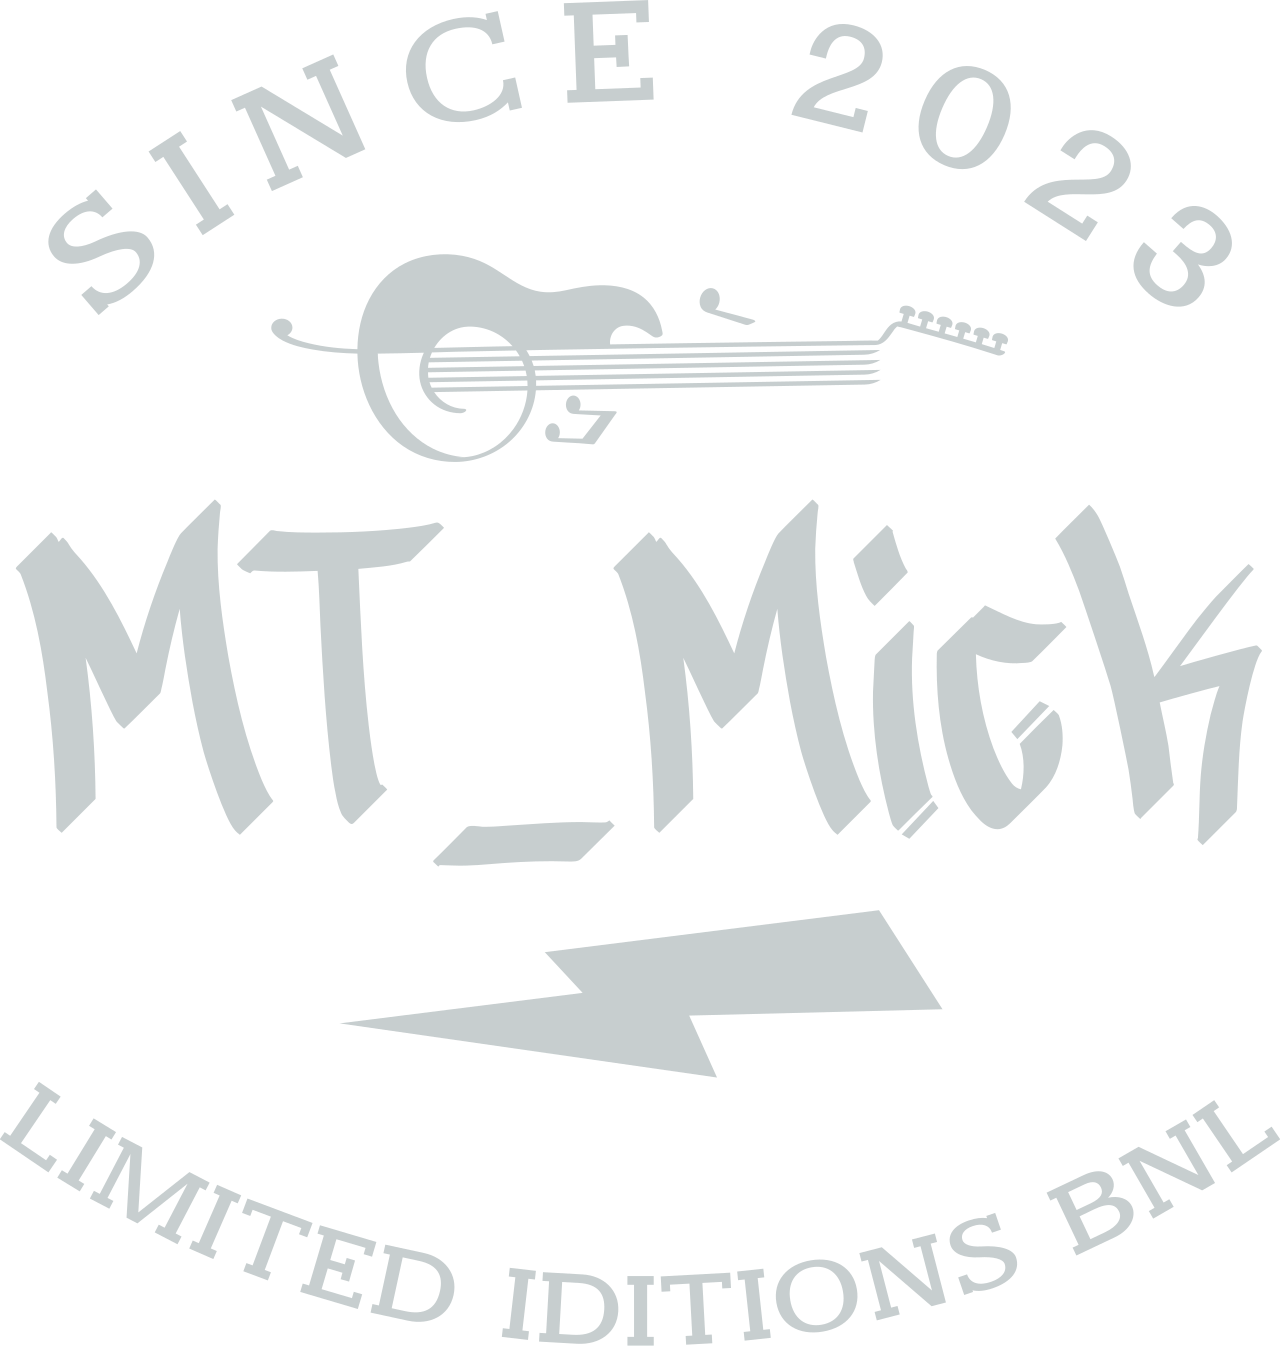 MT_Mick's logo